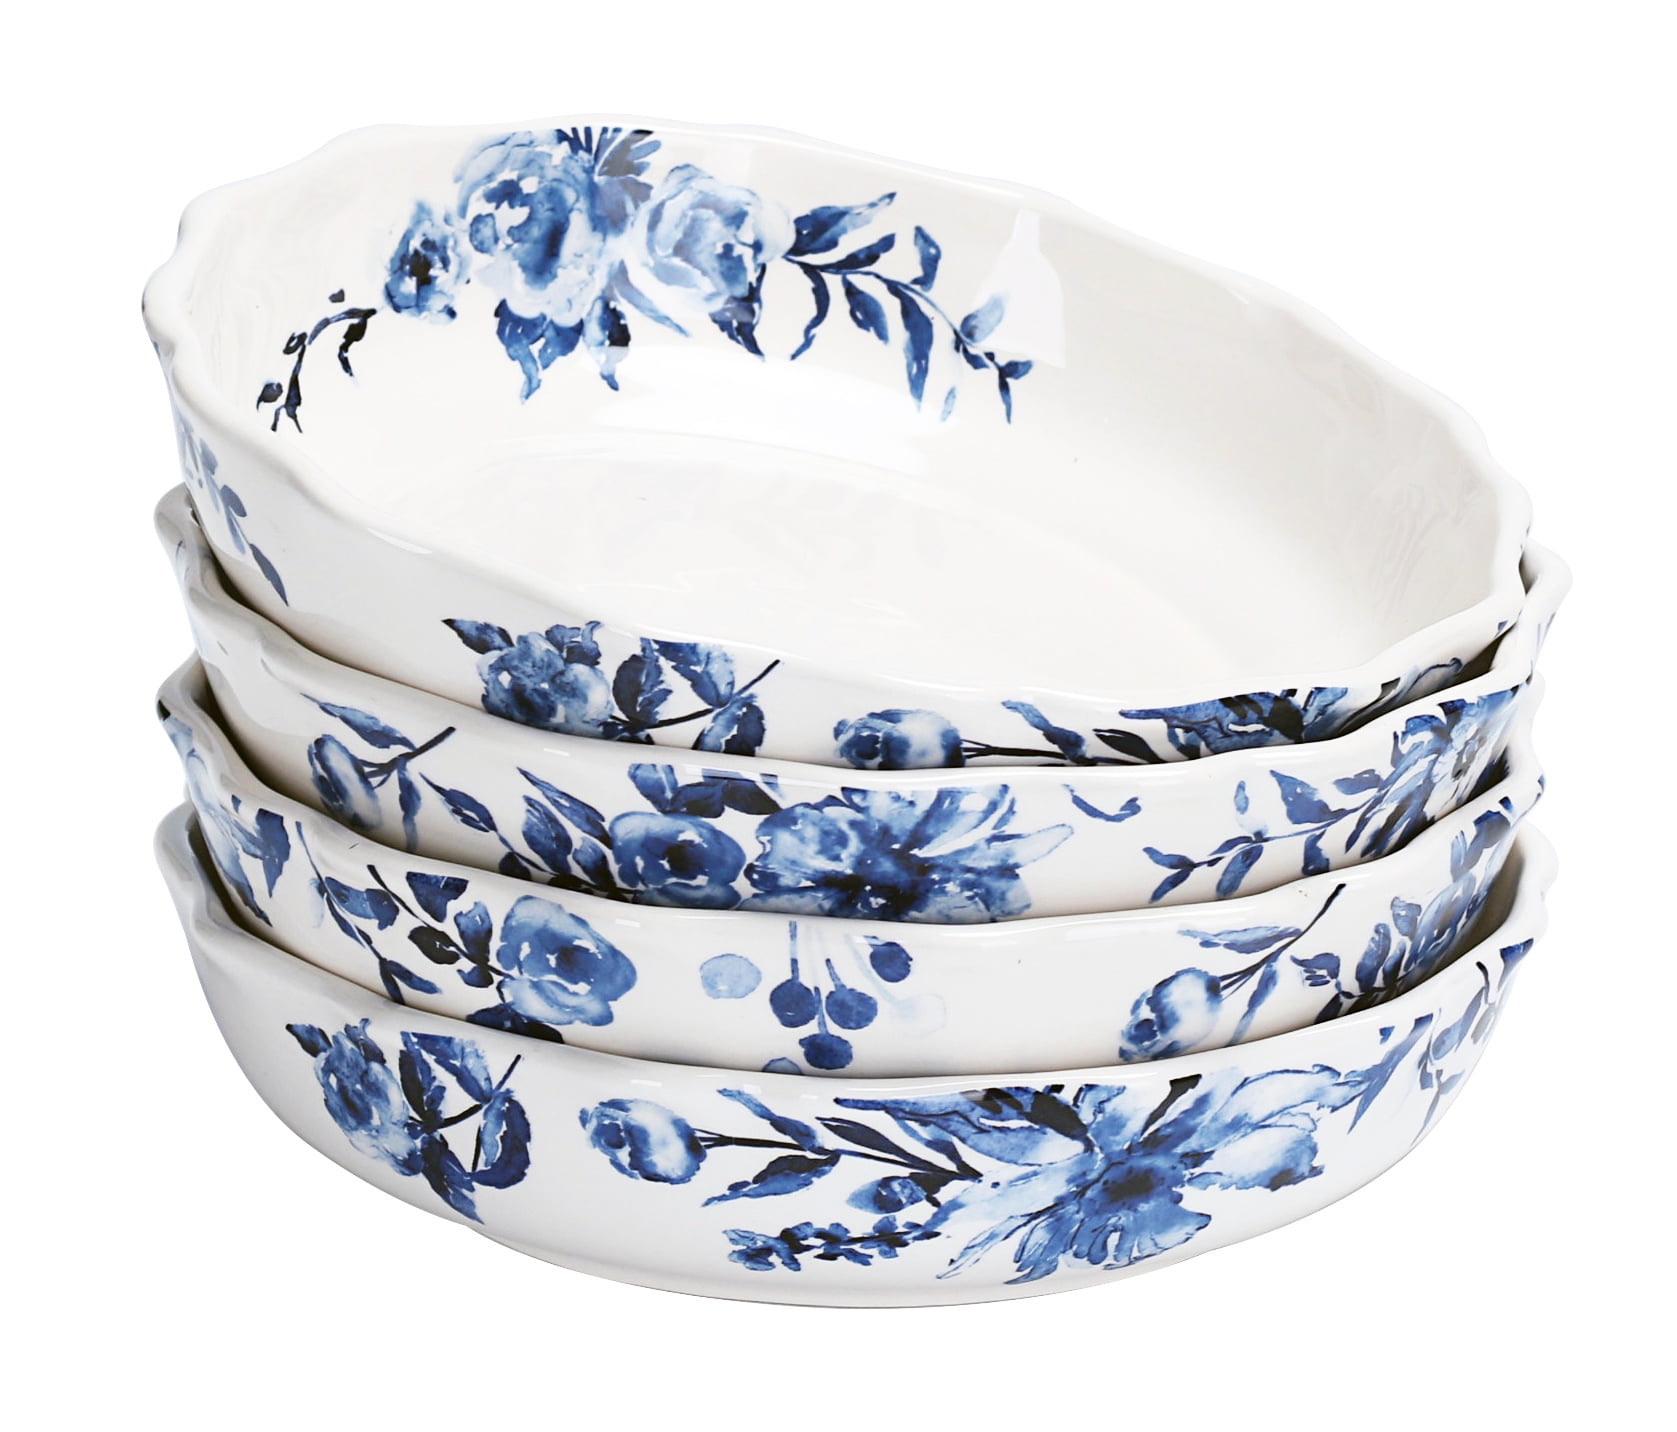 QPM Watercolor Blue Flower Ceramic 32oz Scalloped Dinner Bowls Set of 4,Blue-flower 